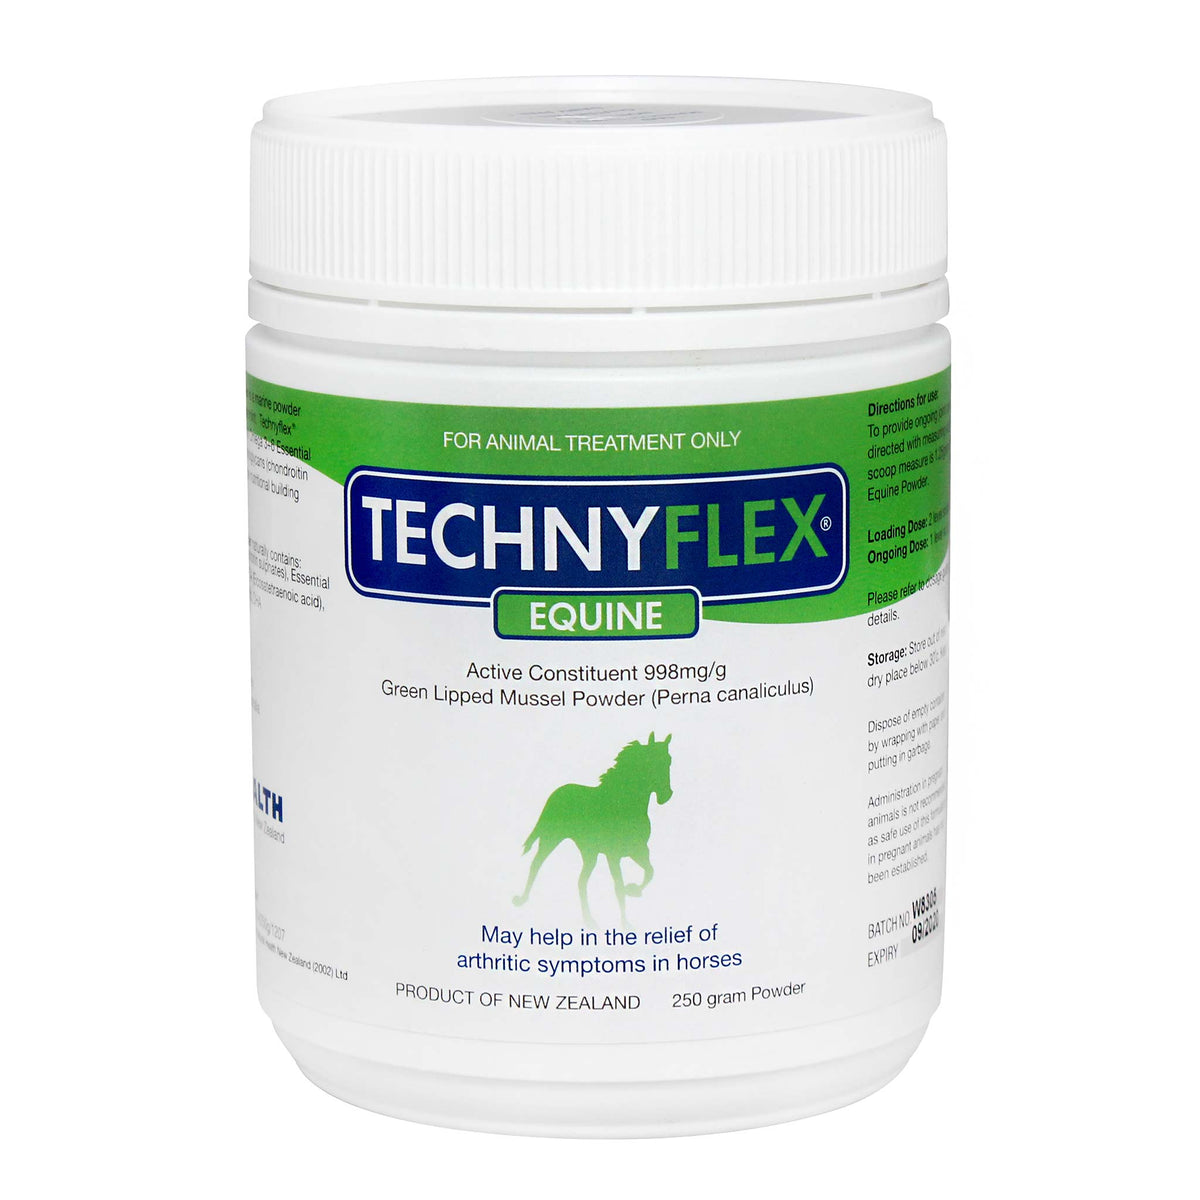 Technyflex Equine Natural Anti-inflammatory Powder for Horses